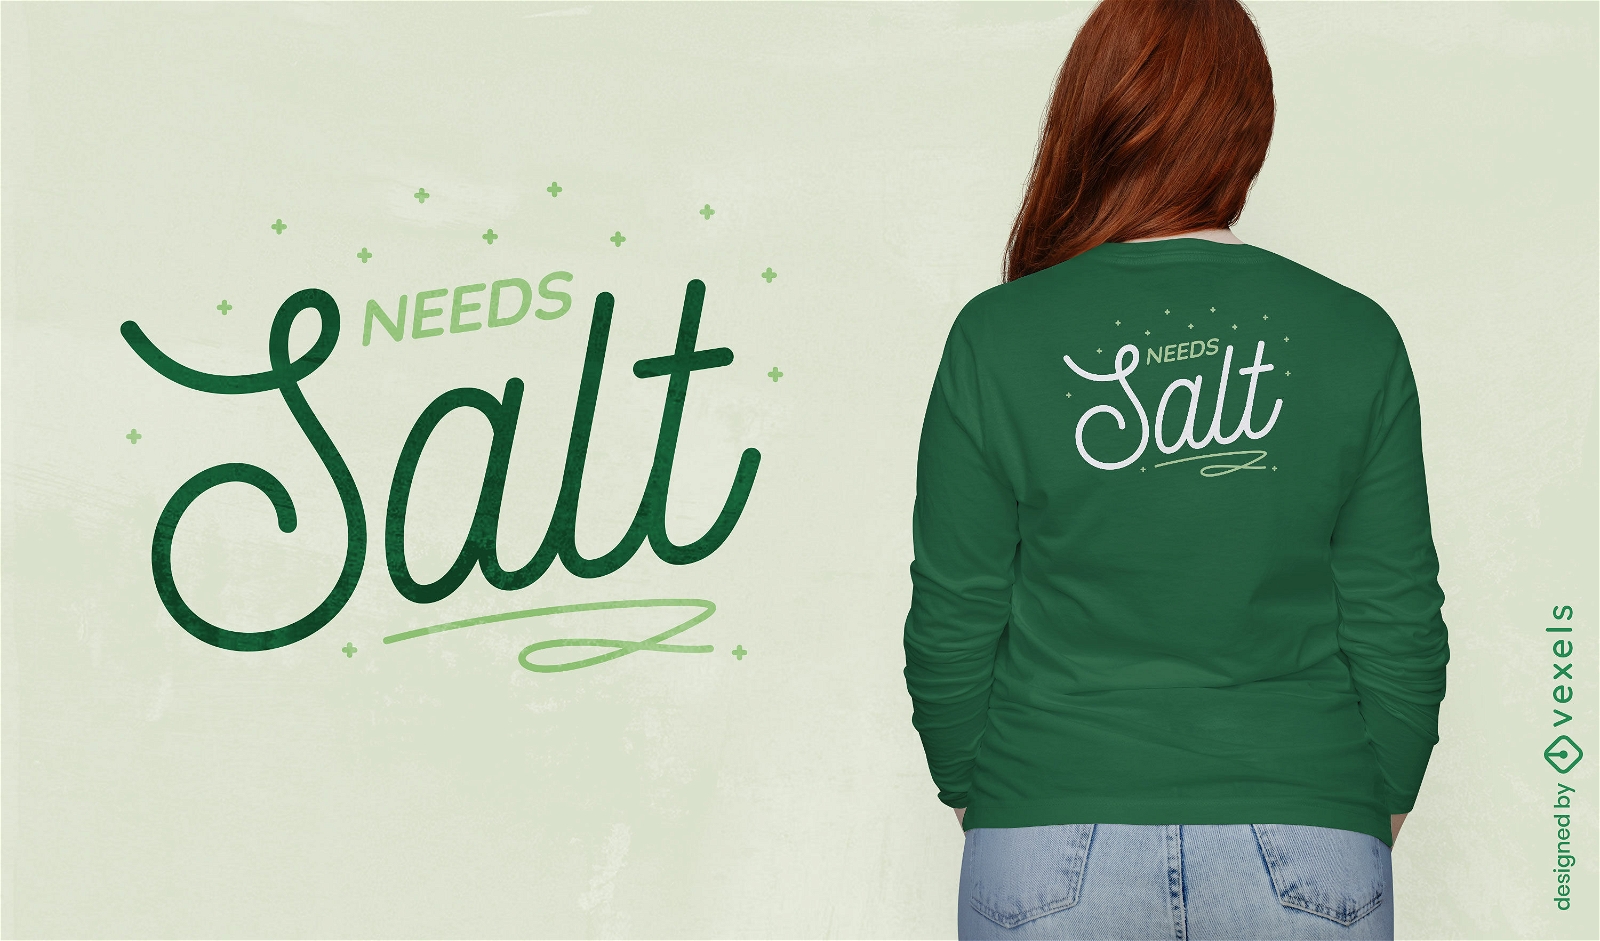 Needs salt cooking quote t-shirt design